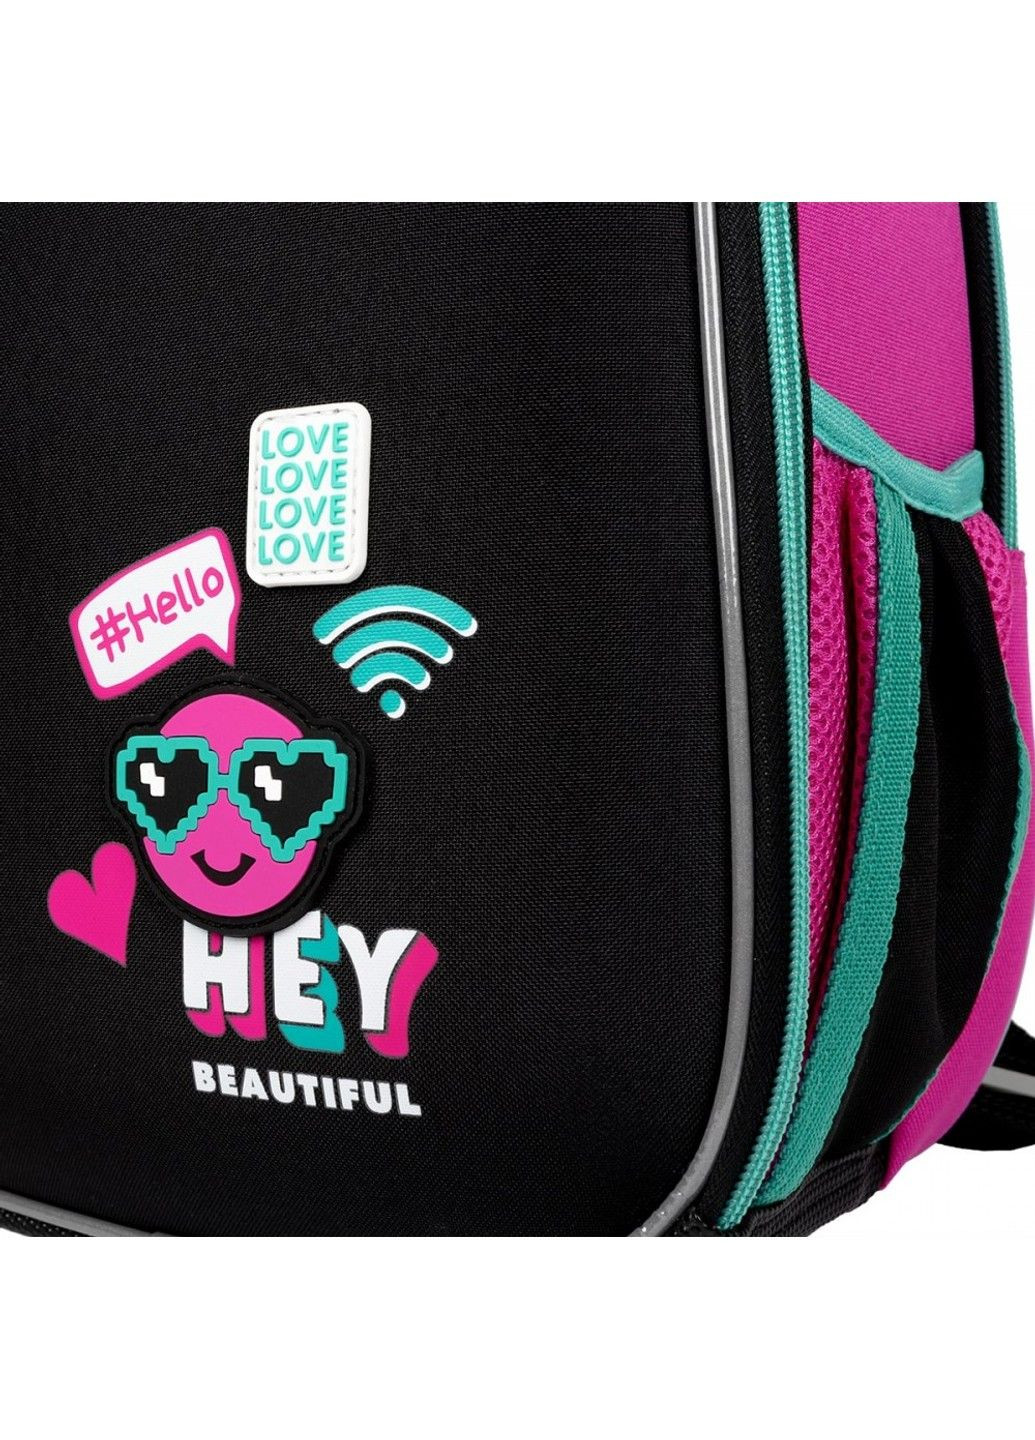 Шкільний рюкзак для молодших класів H-100 Lovely Smile Yes (278404523)